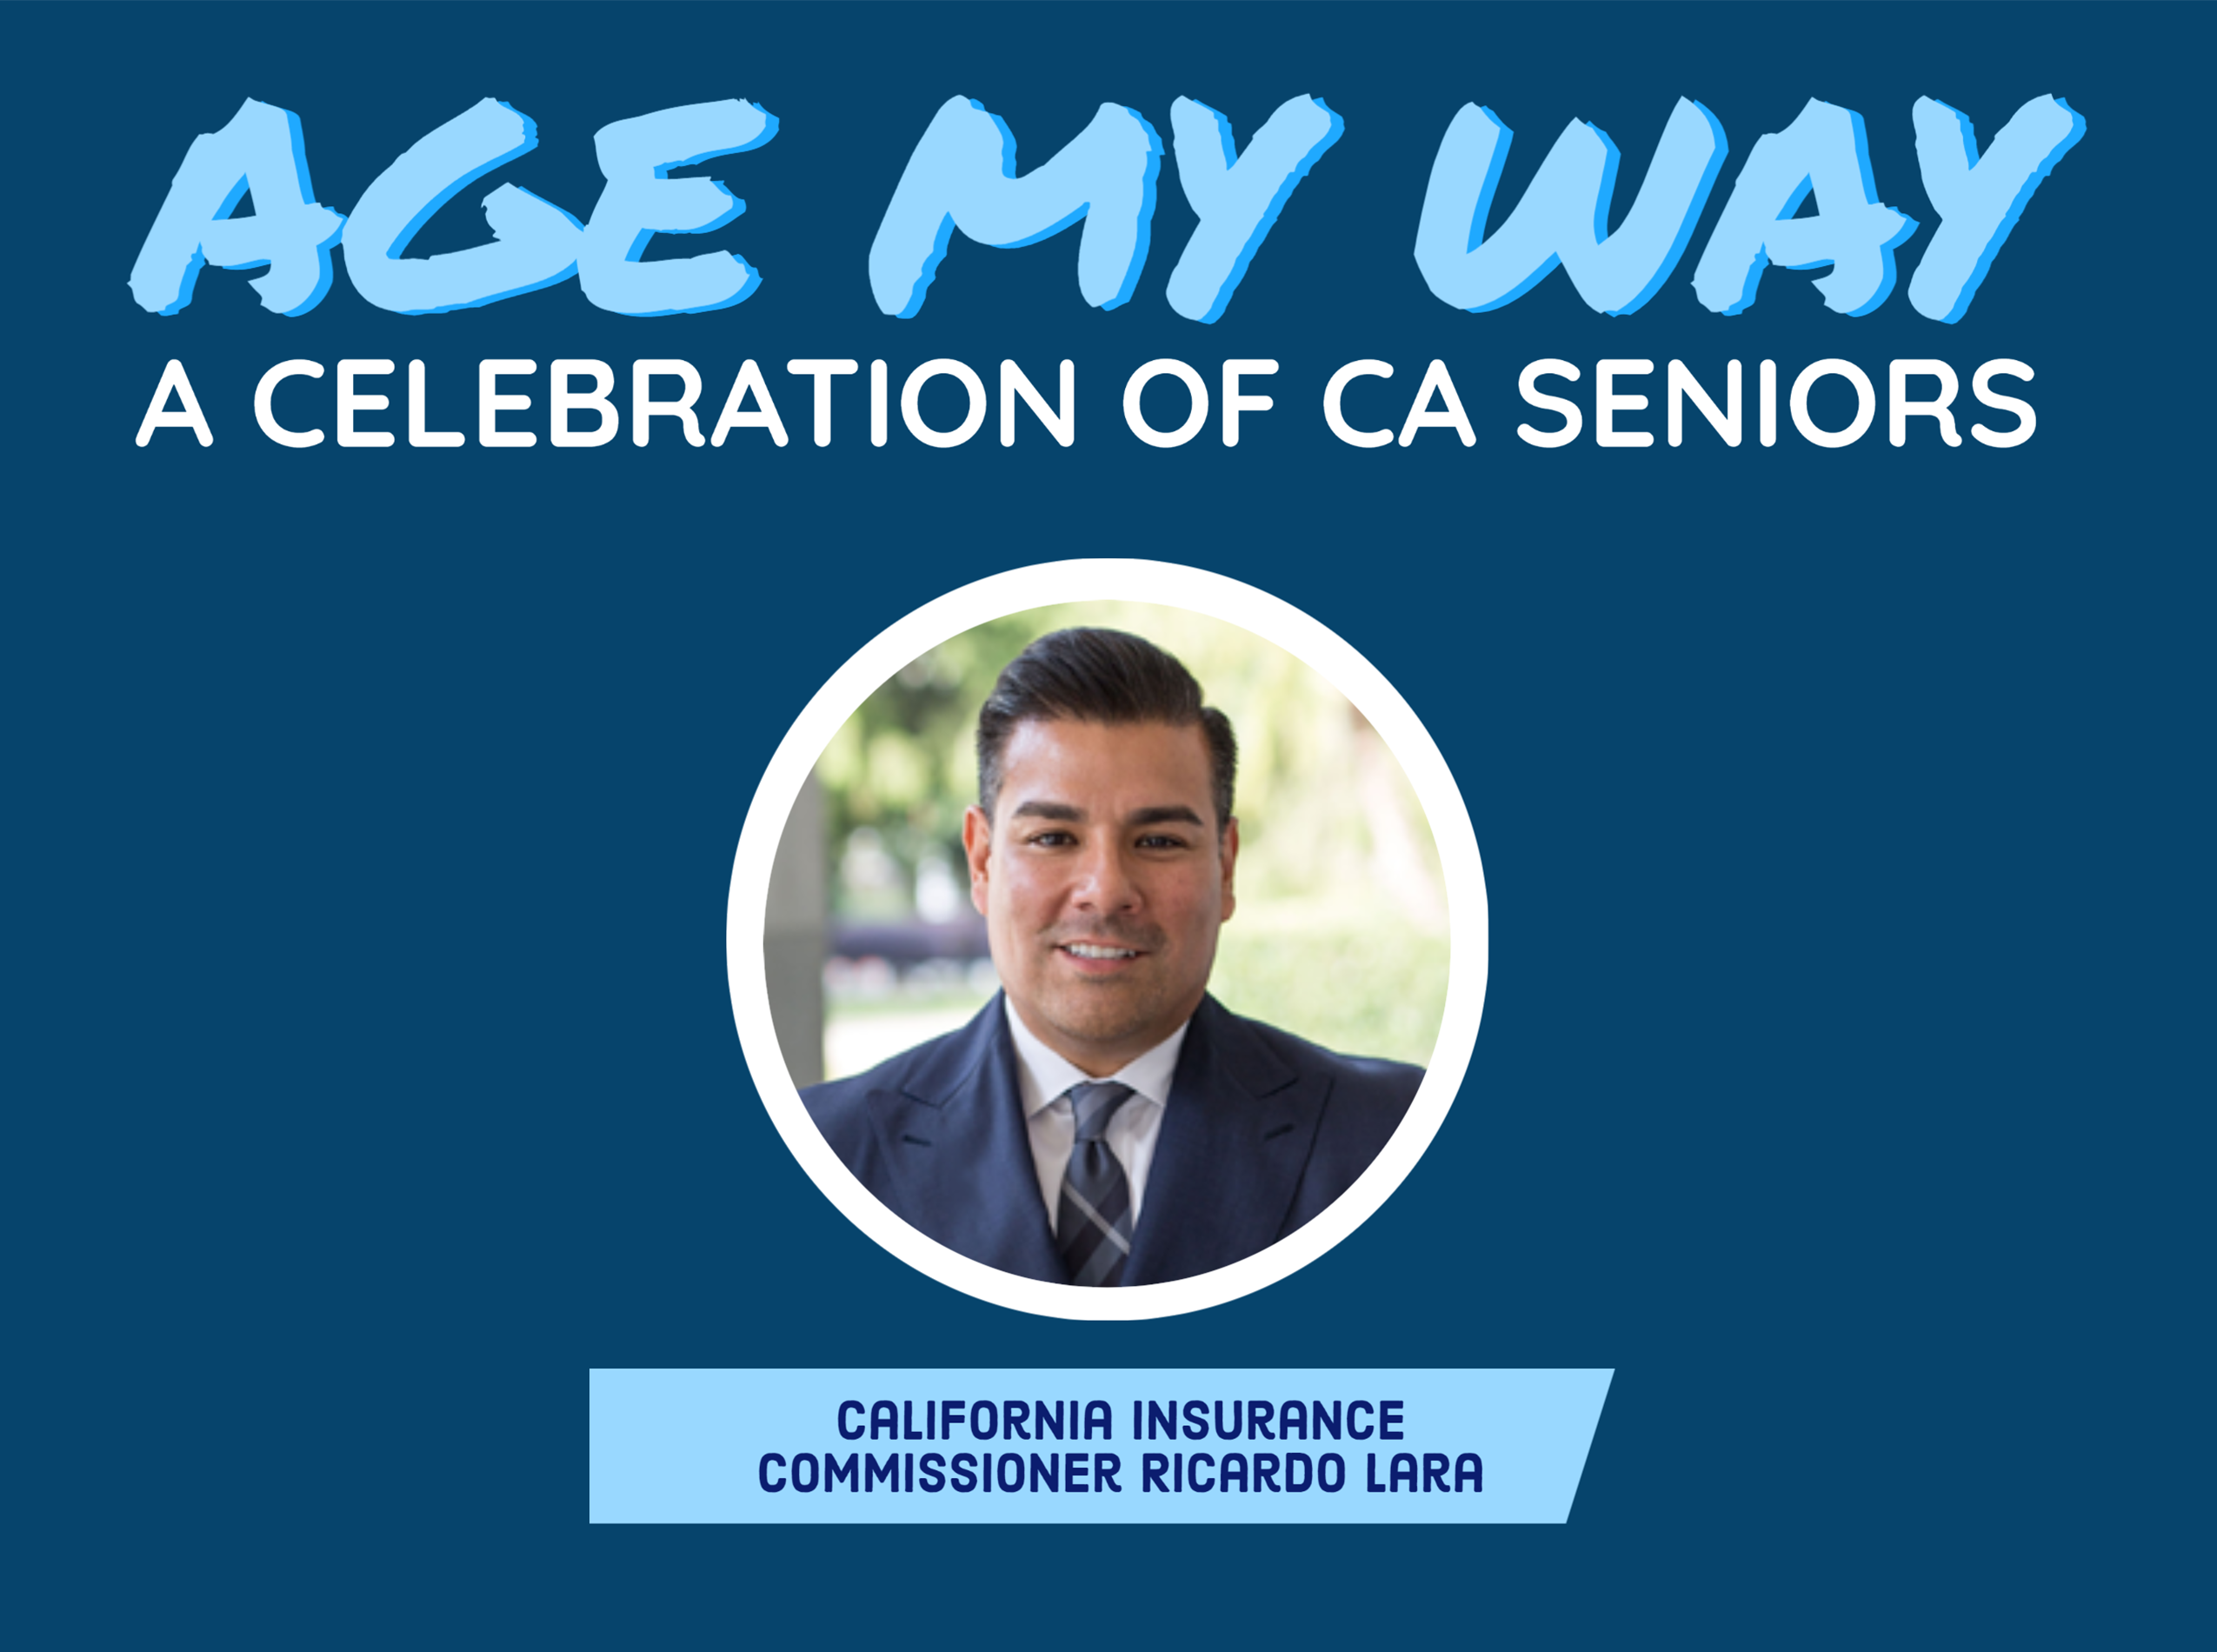 Age my Way, a celebration of CA seniors, hosted by California Insurance Commissioner, Ricardo Lara. 